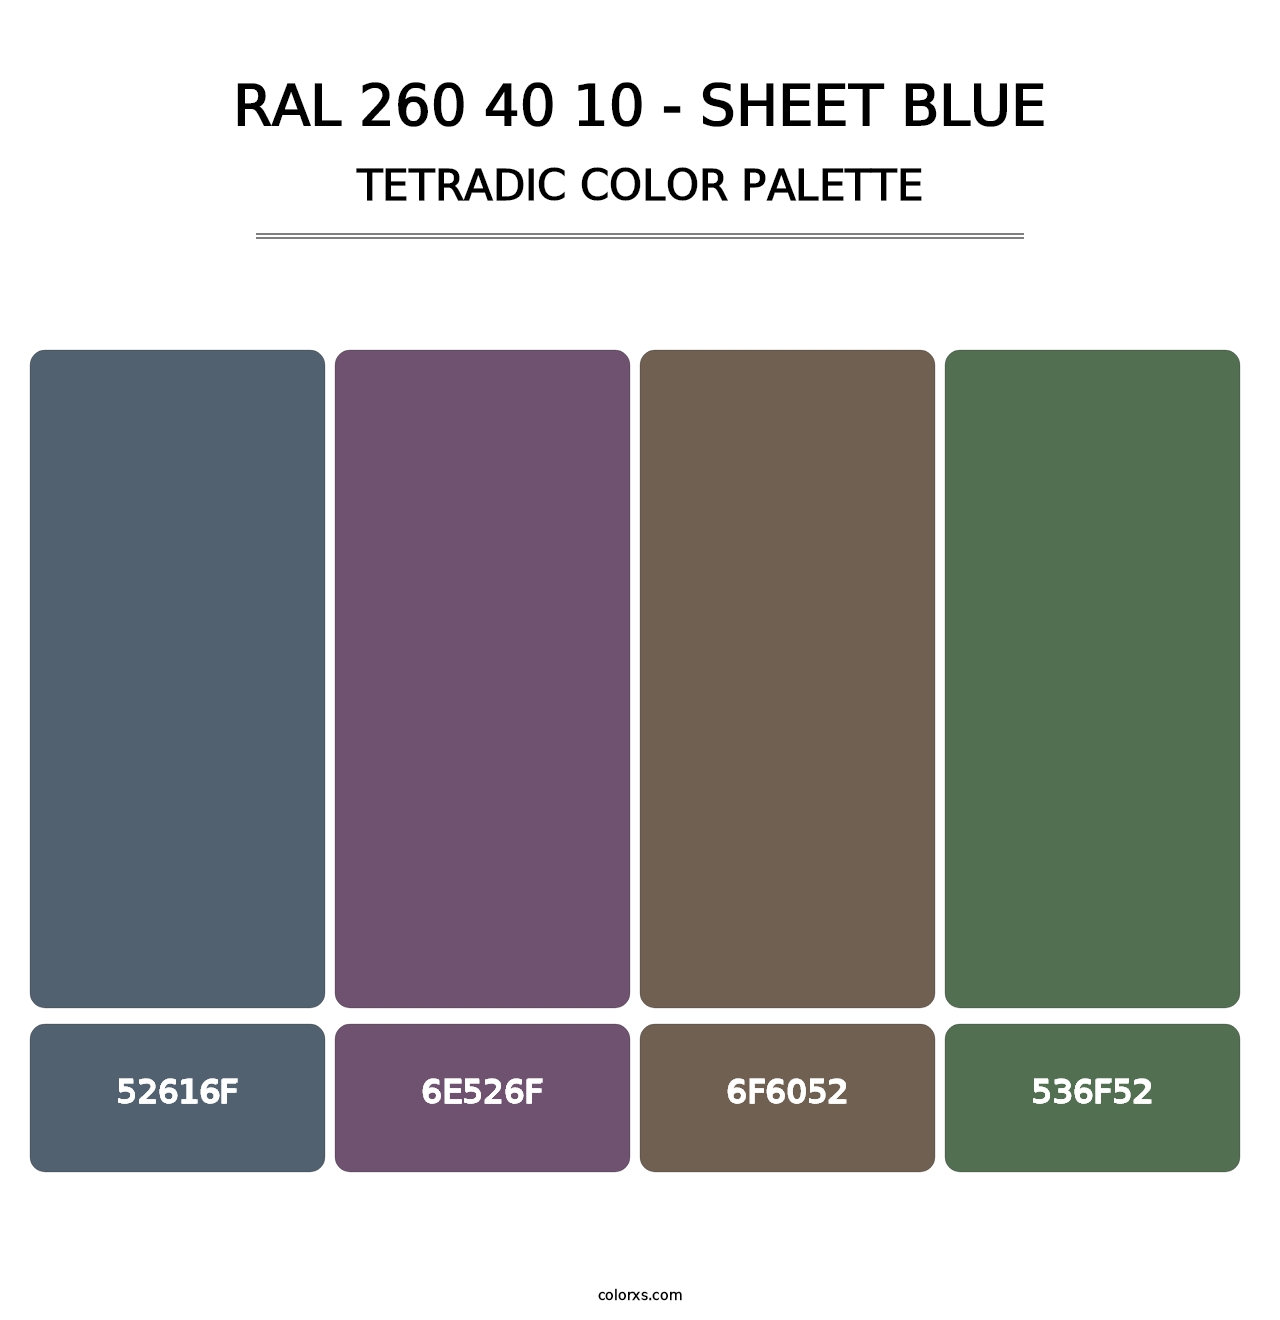 RAL 260 40 10 - Sheet Blue - Tetradic Color Palette